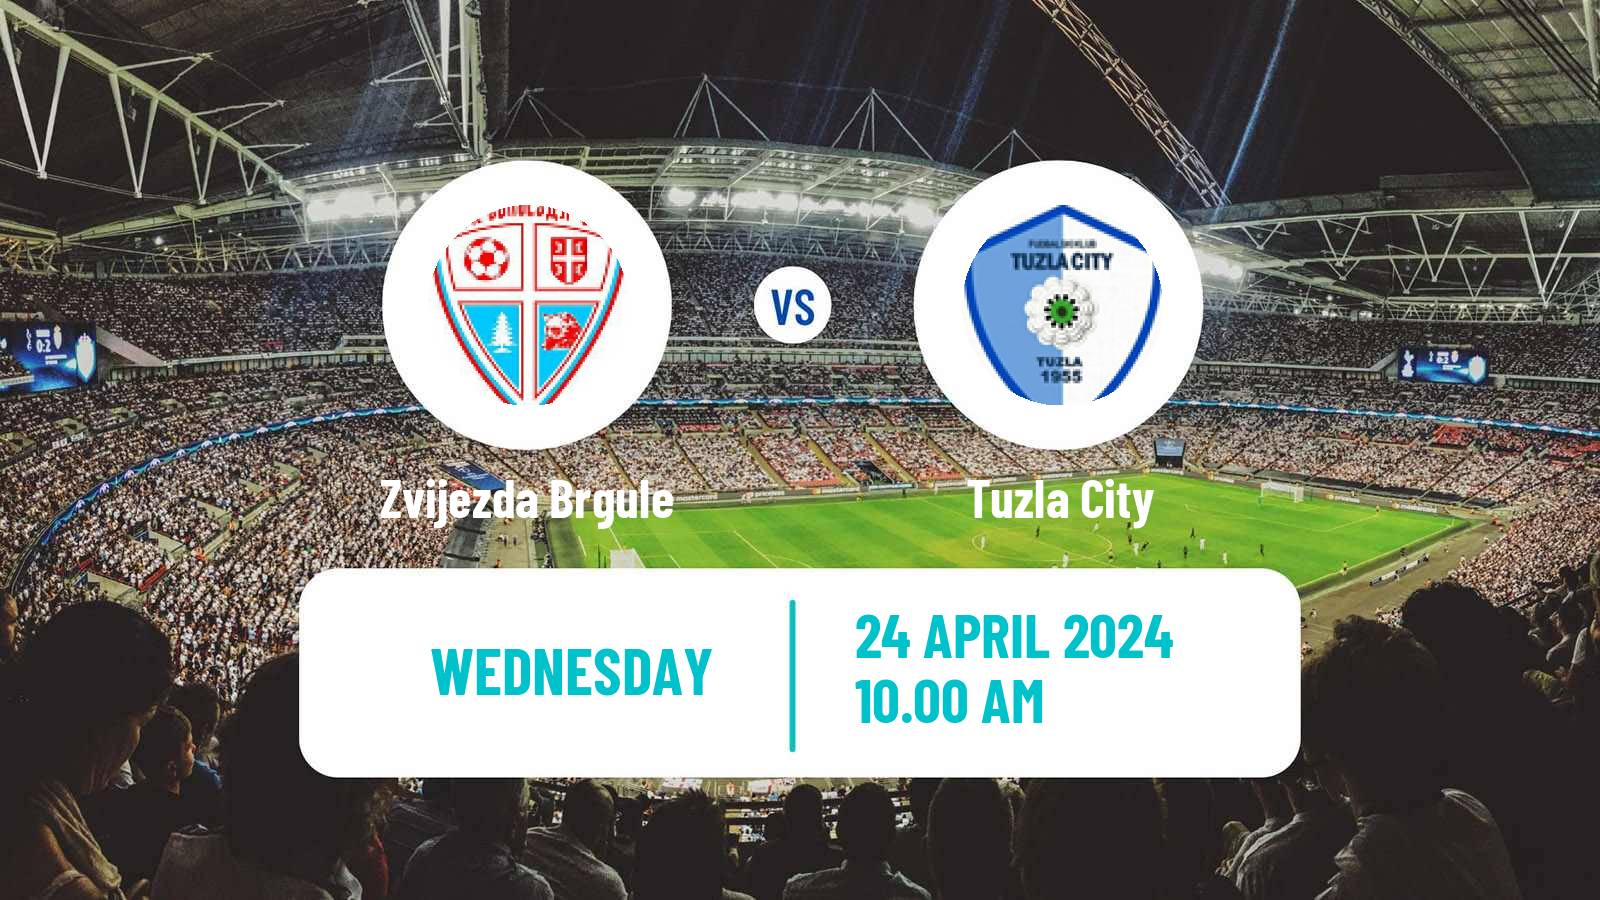 Soccer Bosnian Premier League Zvijezda Brgule - Tuzla City